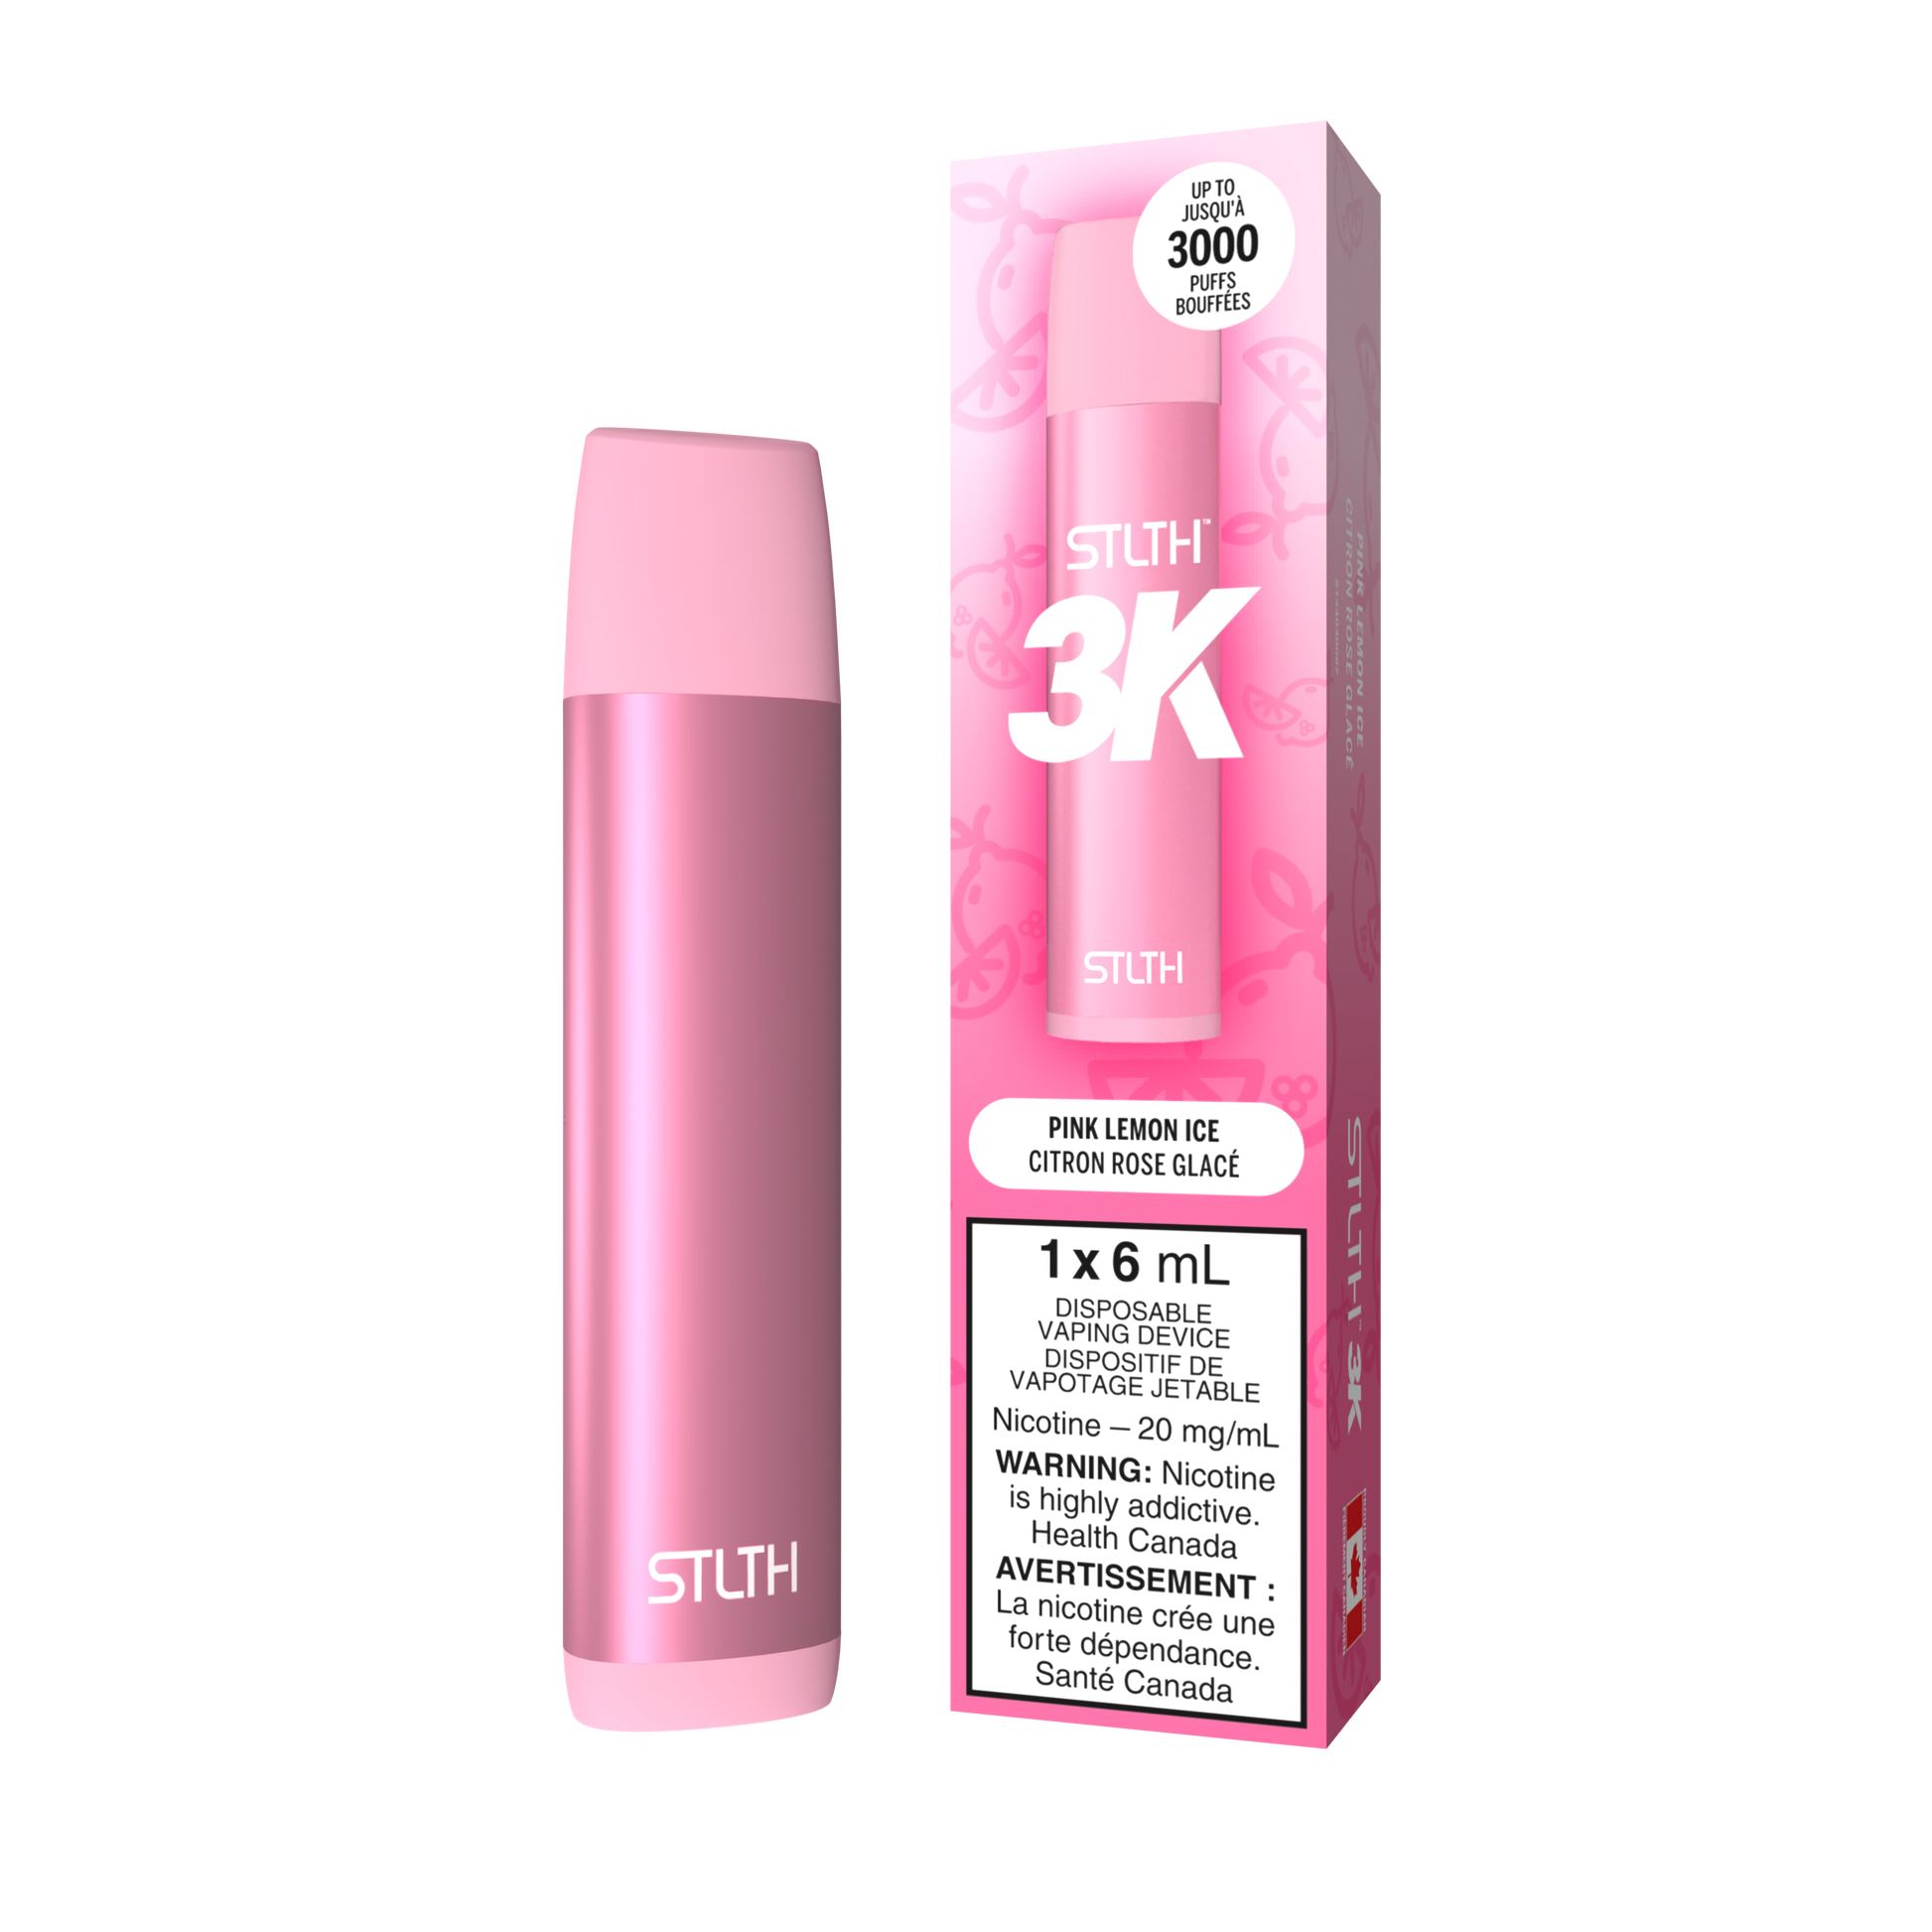 STLTH 3K - PINK LEMON ICE